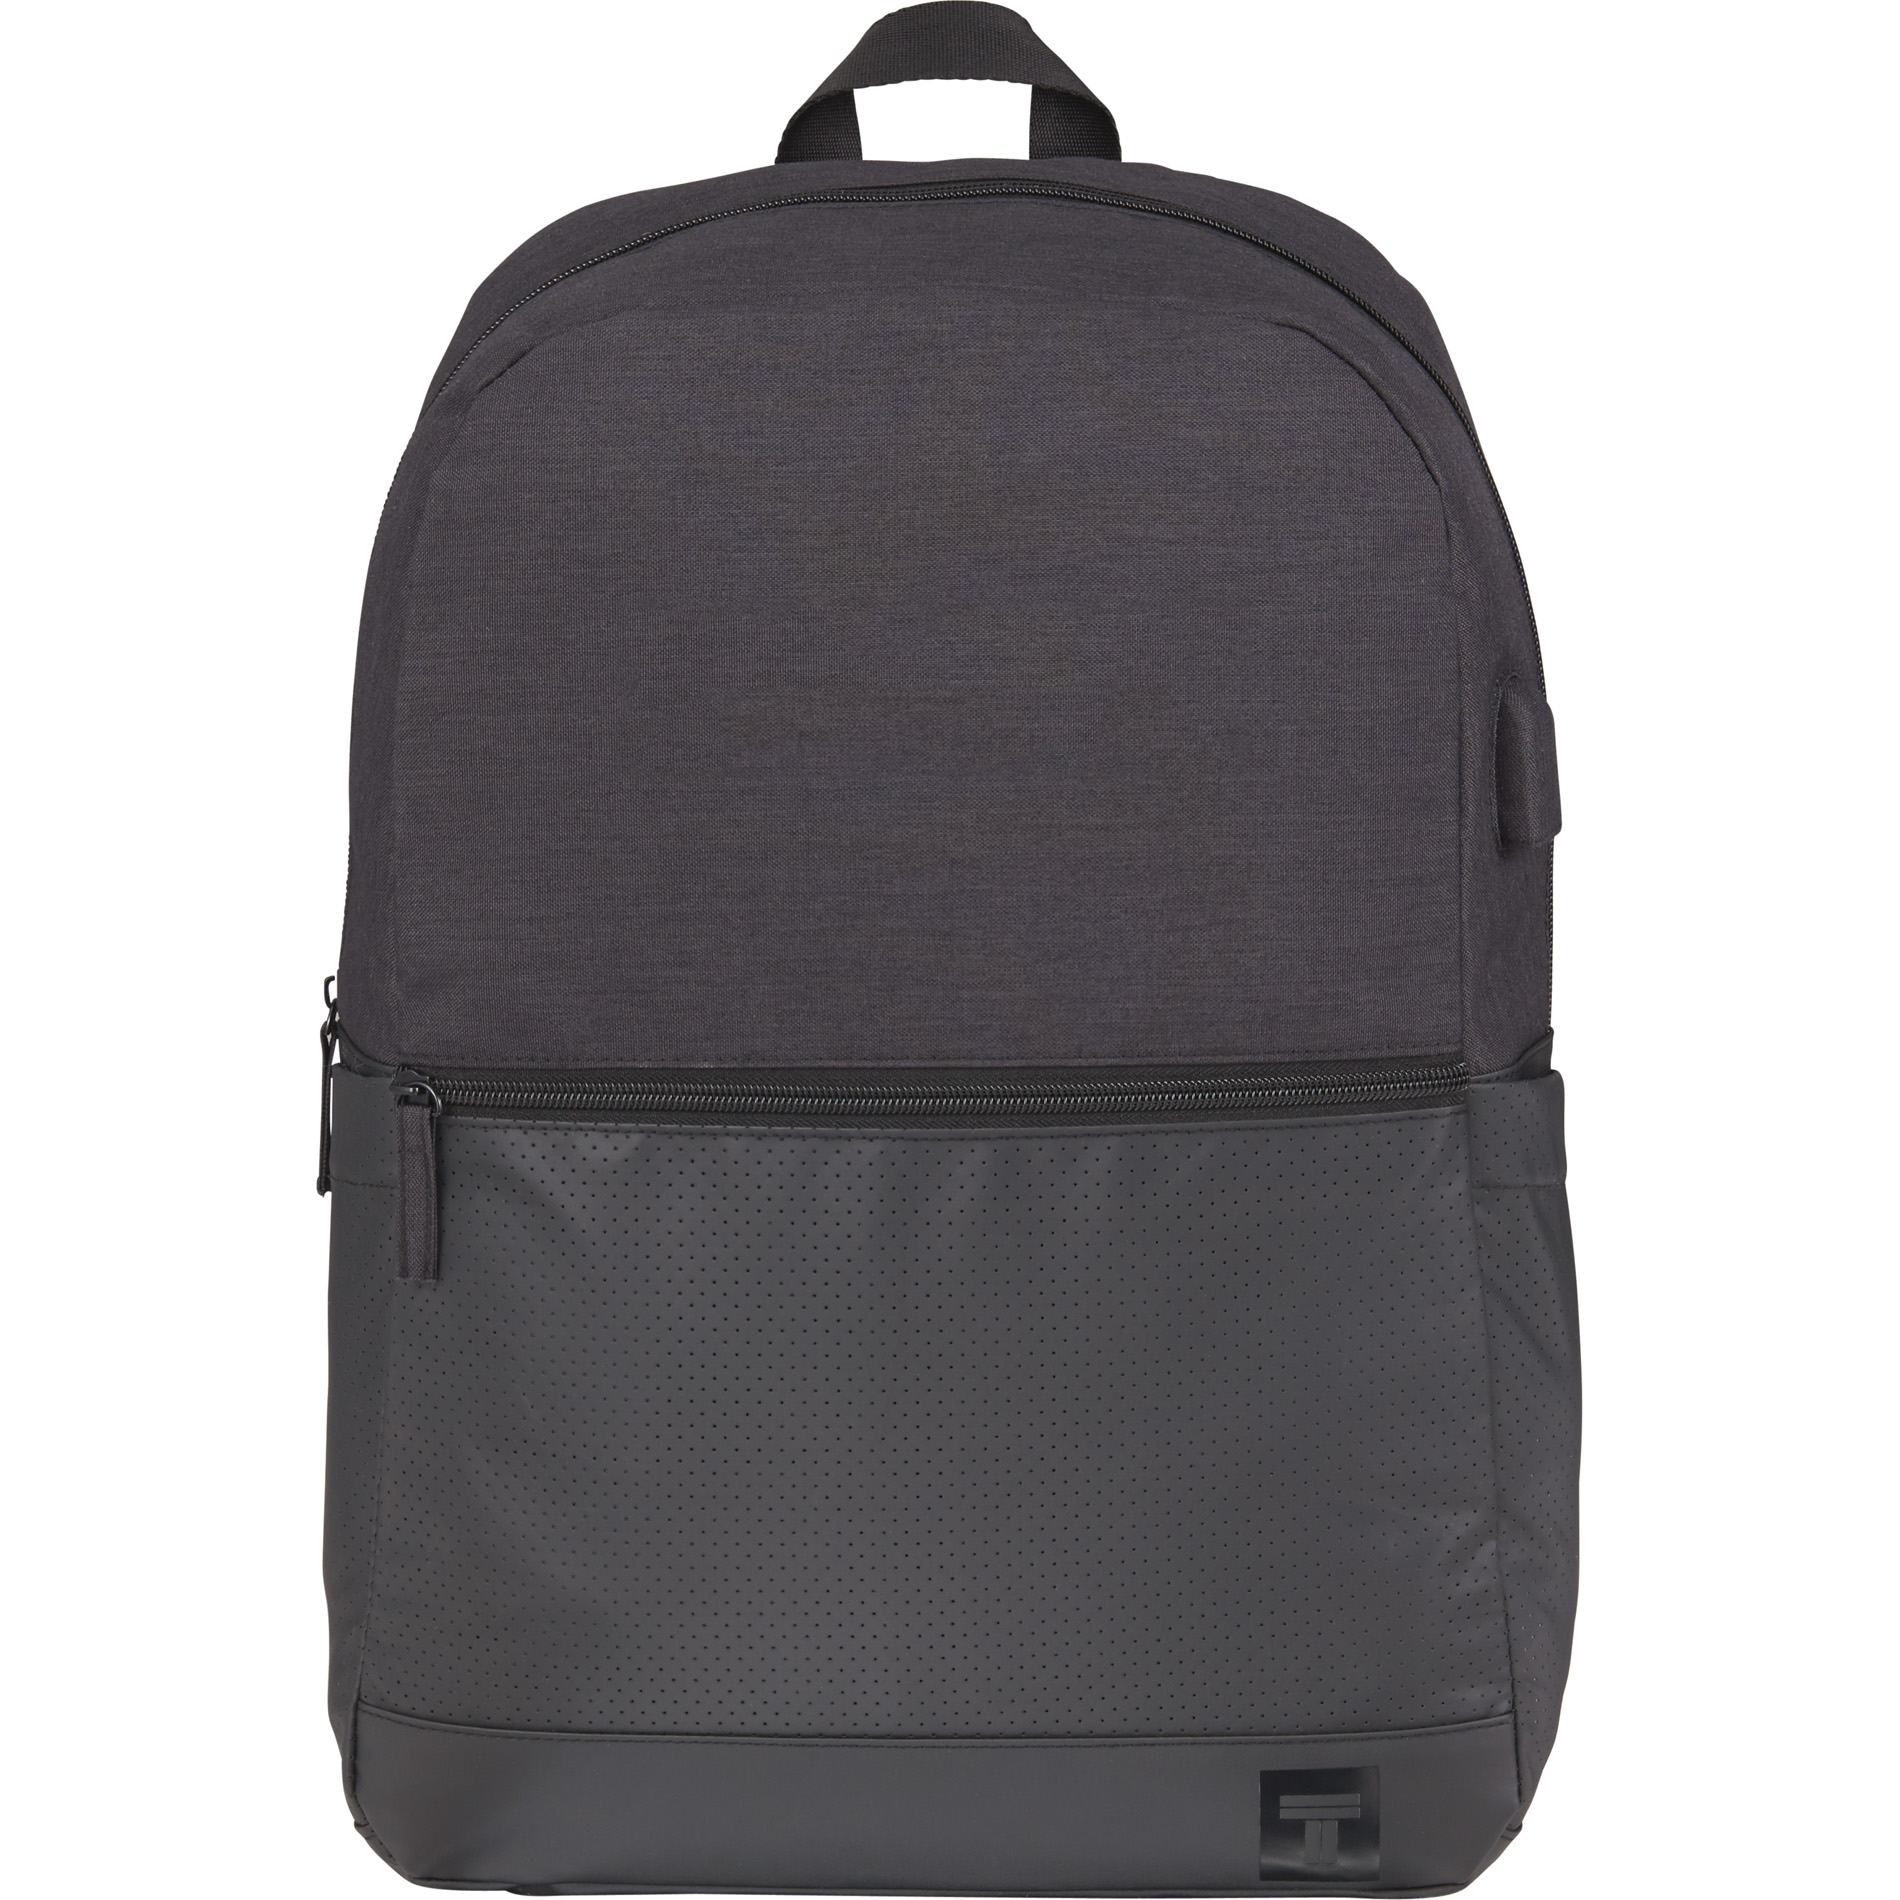 Tranzip 2020-25 - Perf 15" Computer Backpack